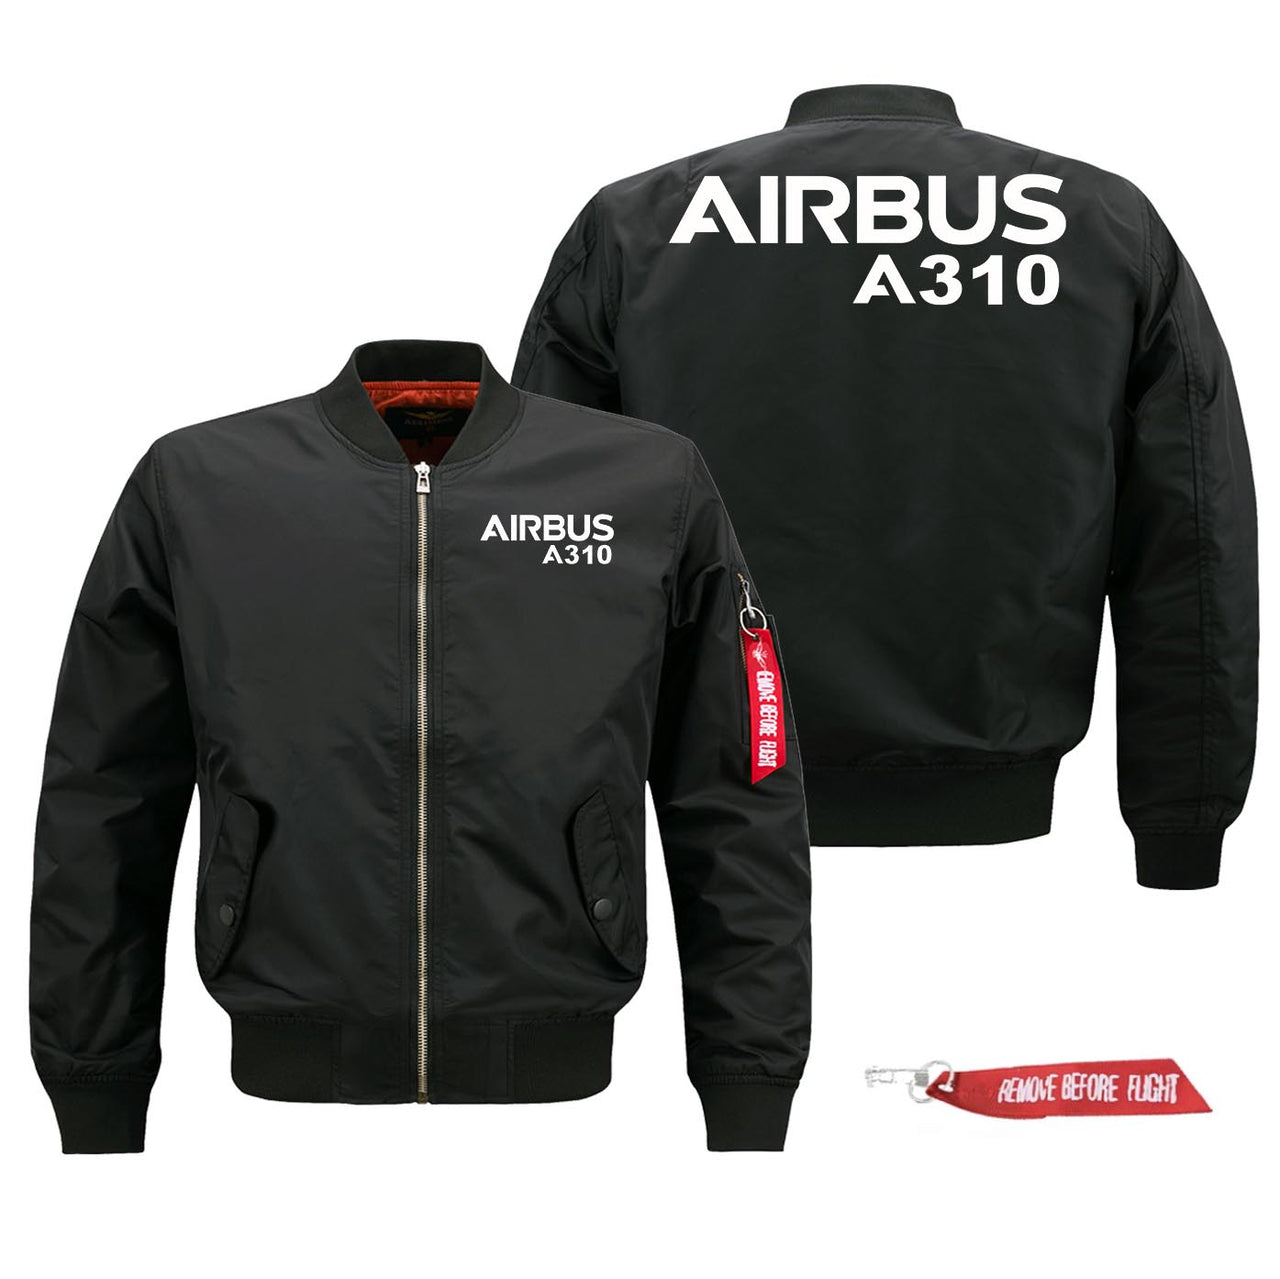 Airbus A310 Text Designed Pilot Jackets (Customizable)